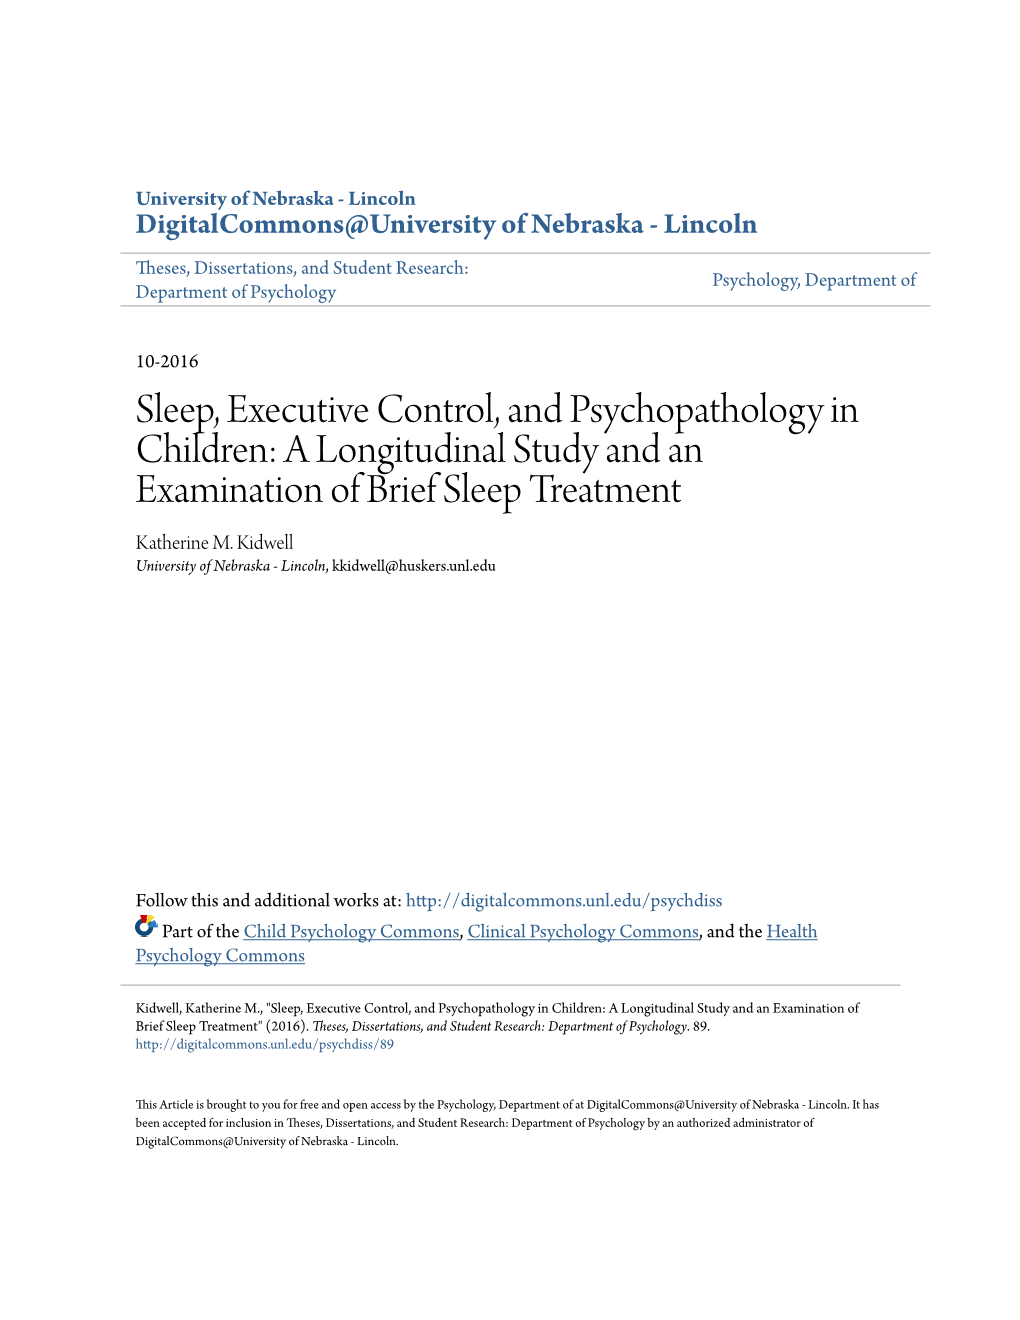 A Longitudinal Study and an Examination of Brief Sleep Treatment Katherine M